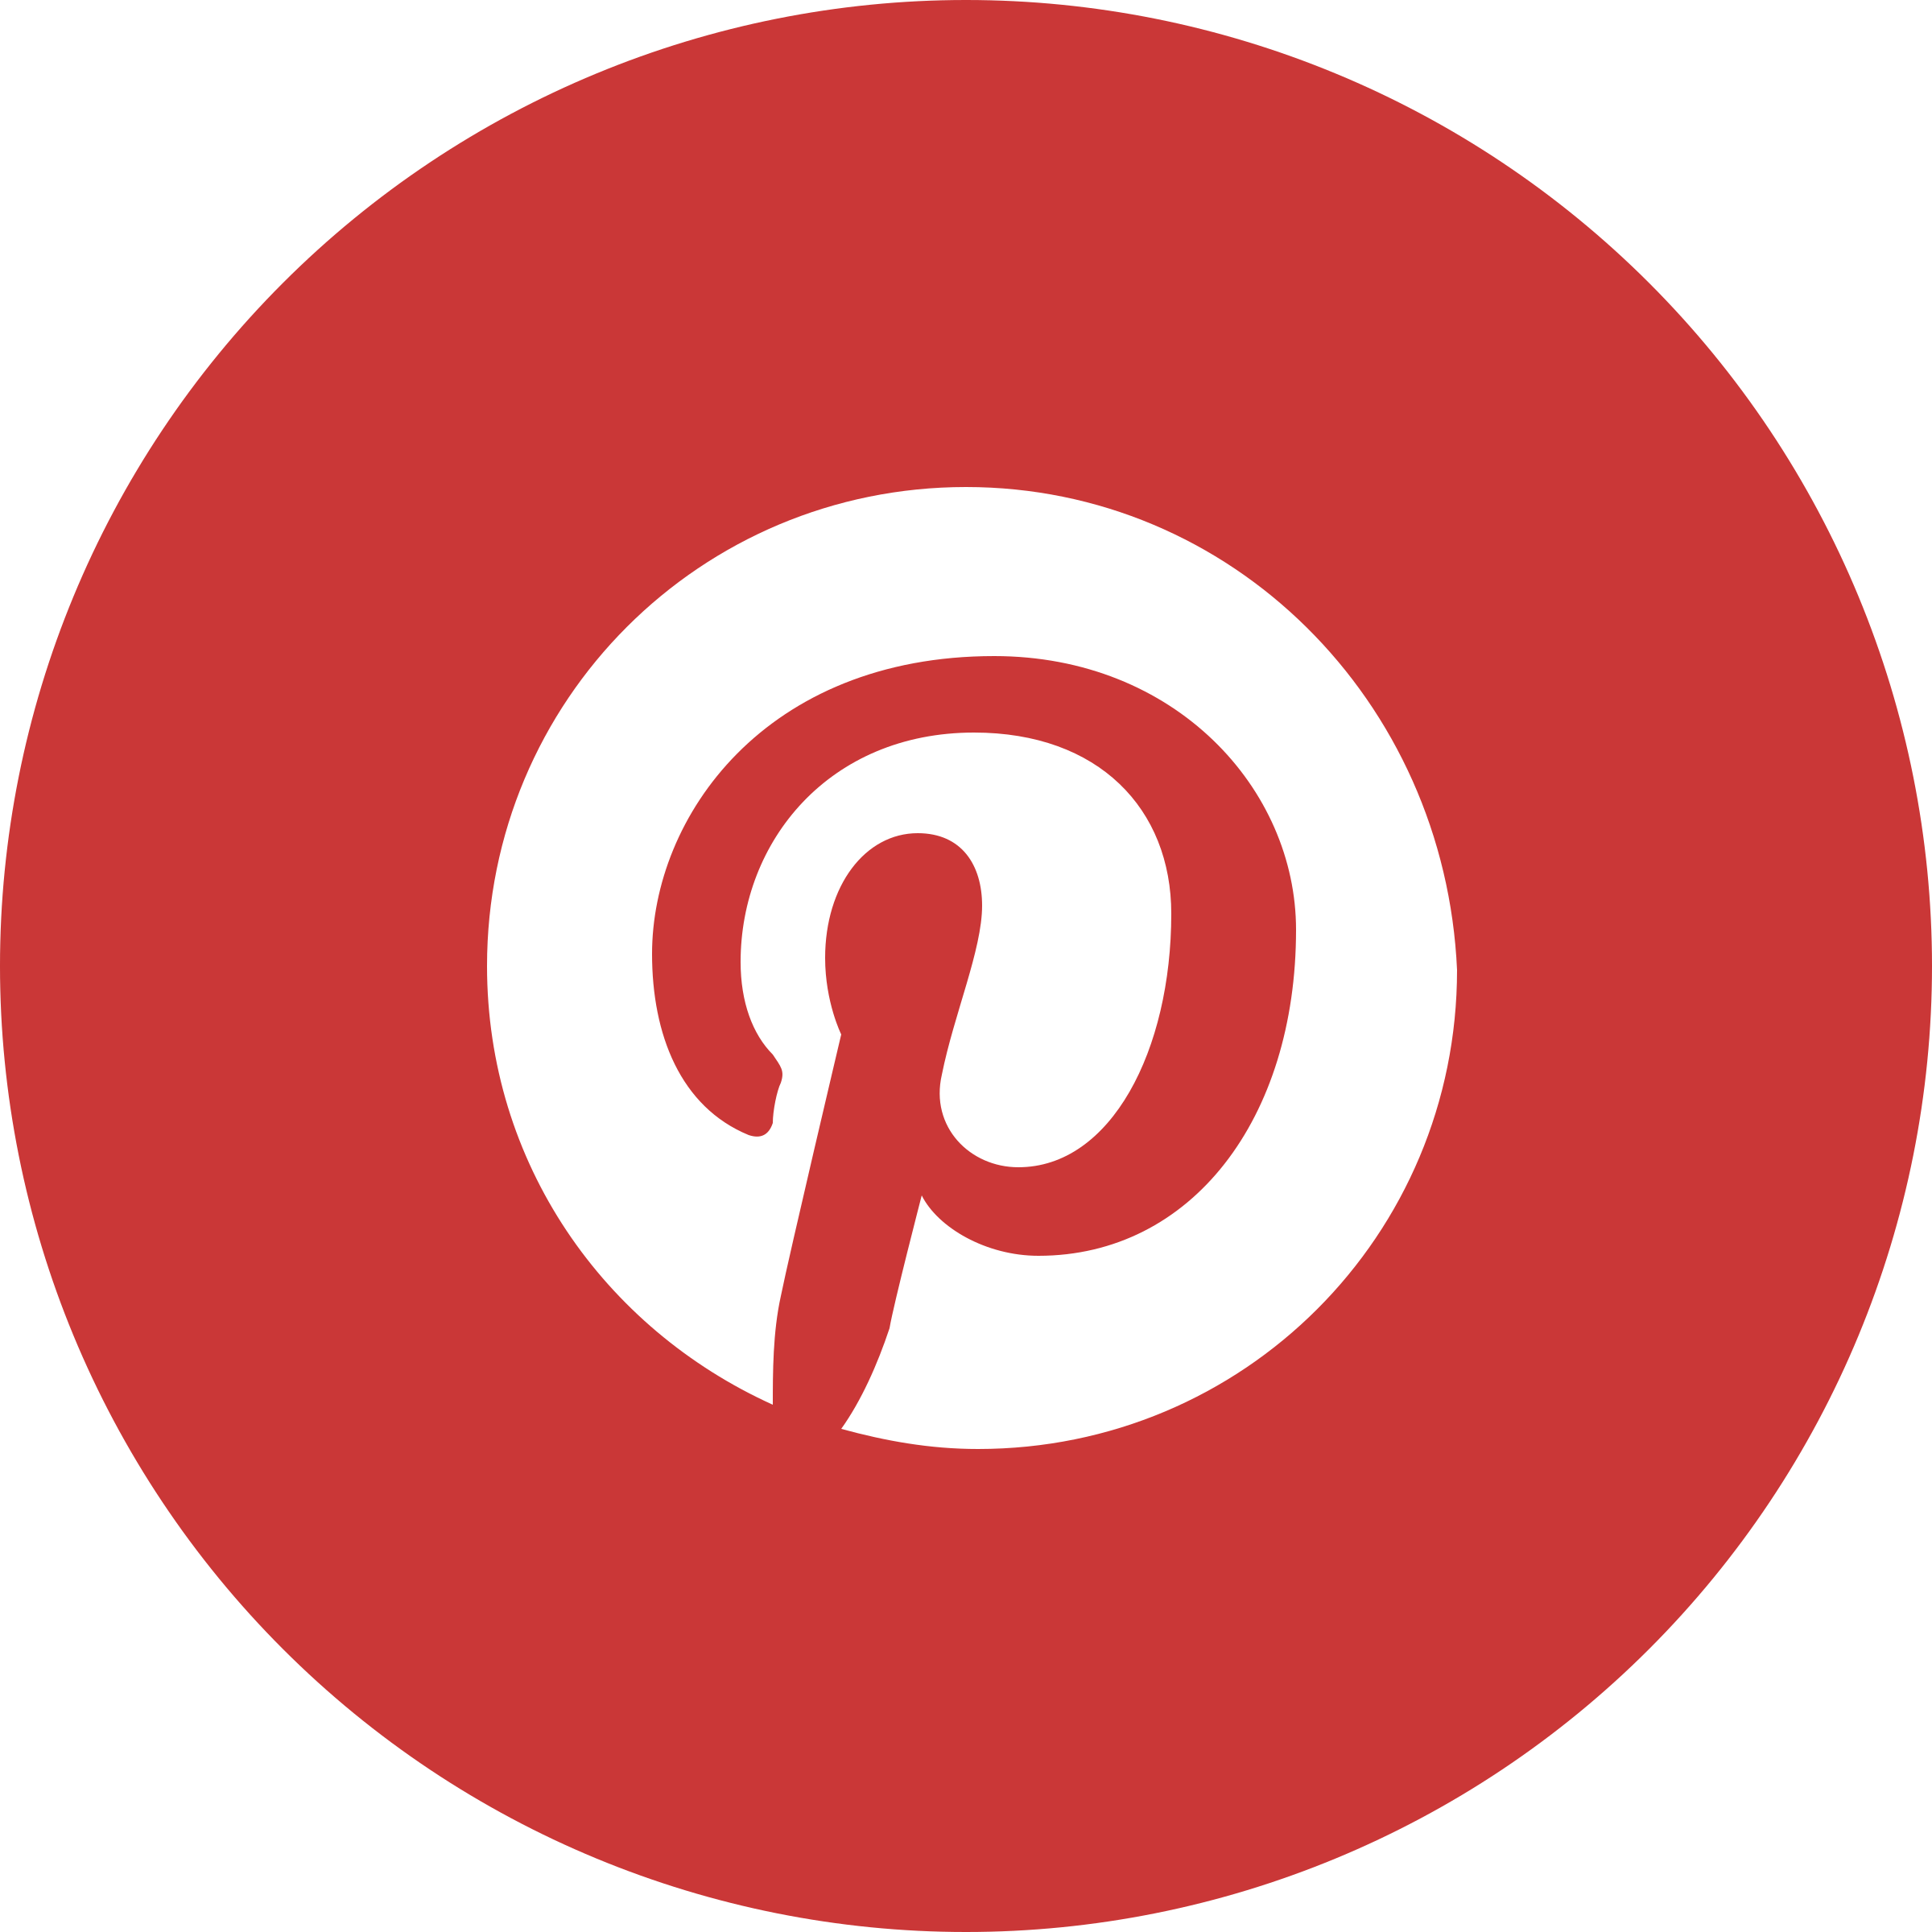 Pinterest-Logo